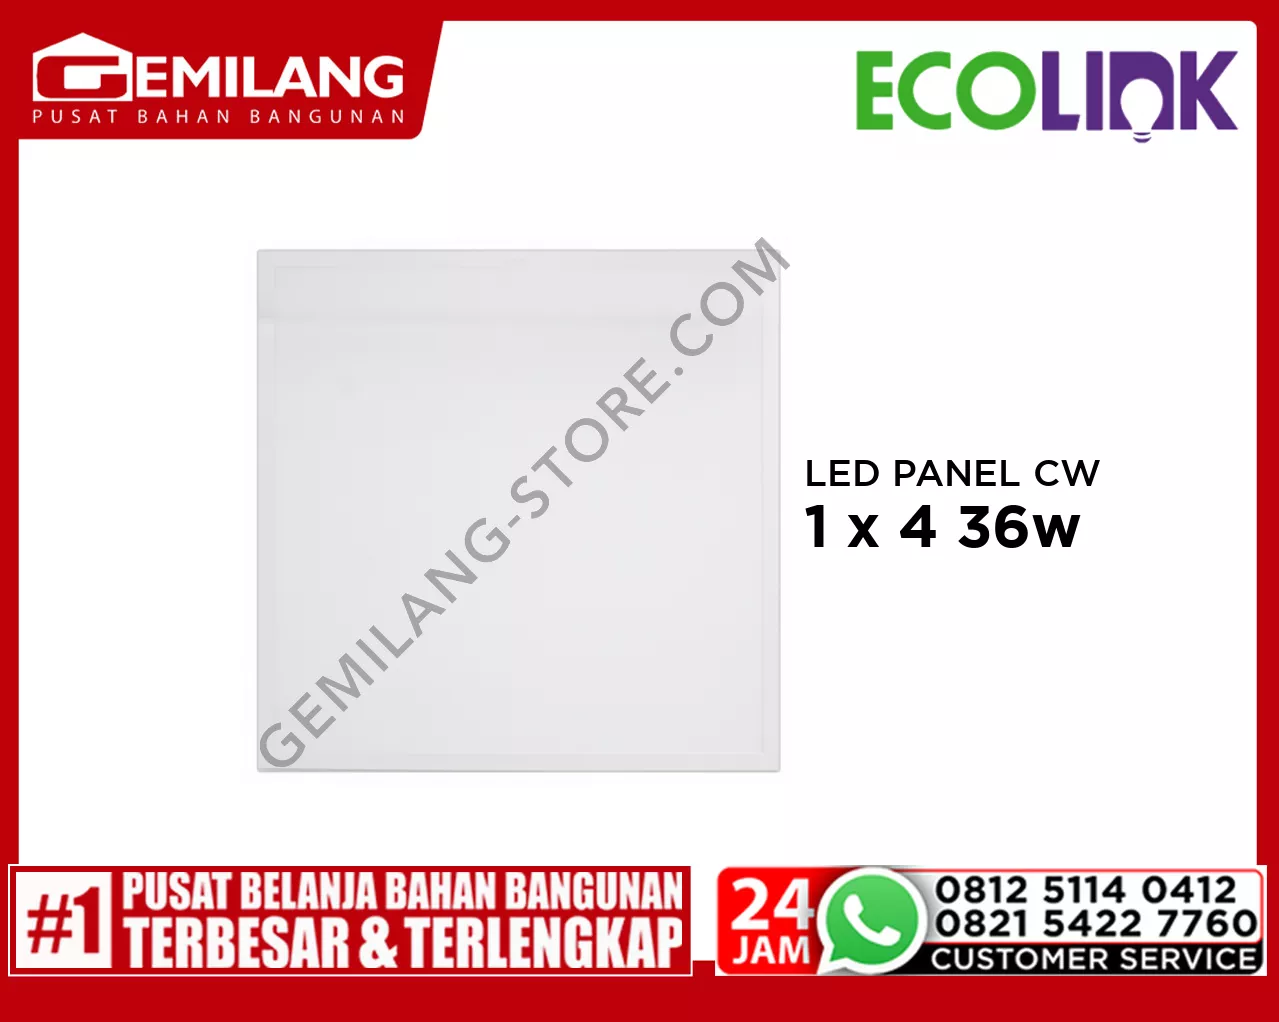 ECOLINK LED PANEL PL007 CW 1 x 4 36w